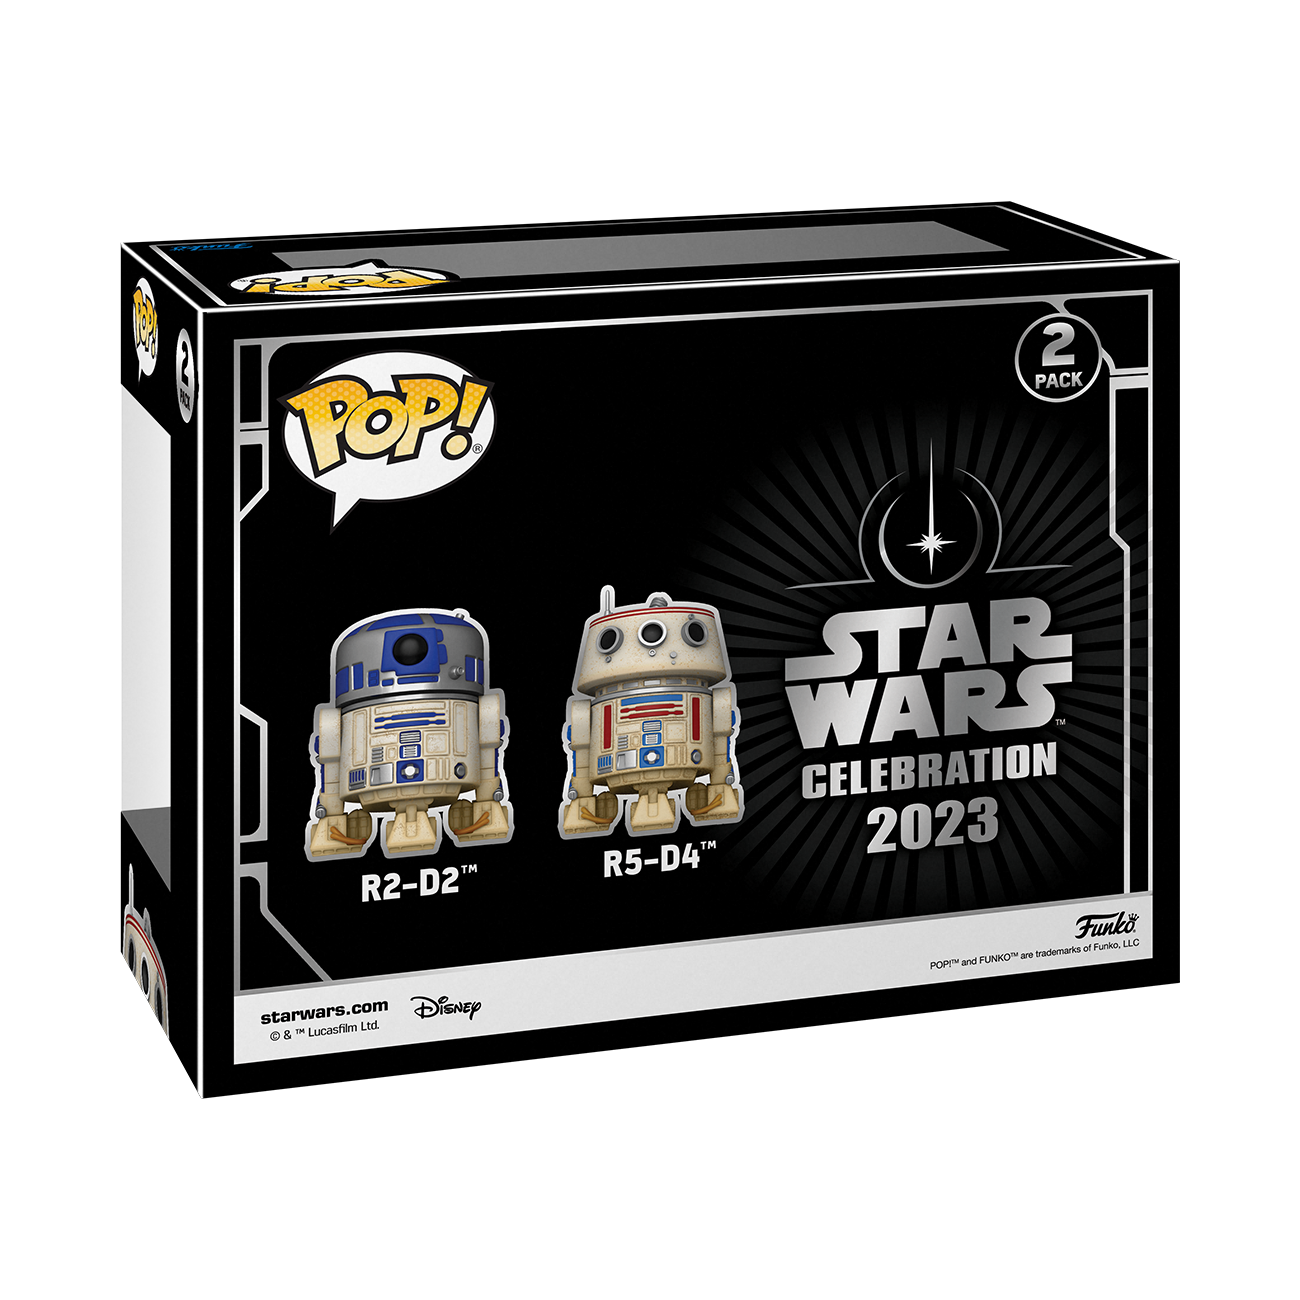 Funko Pop Star Wars: Star Wars - R2-D2 & C-3PO Exclusivo 2 Pack